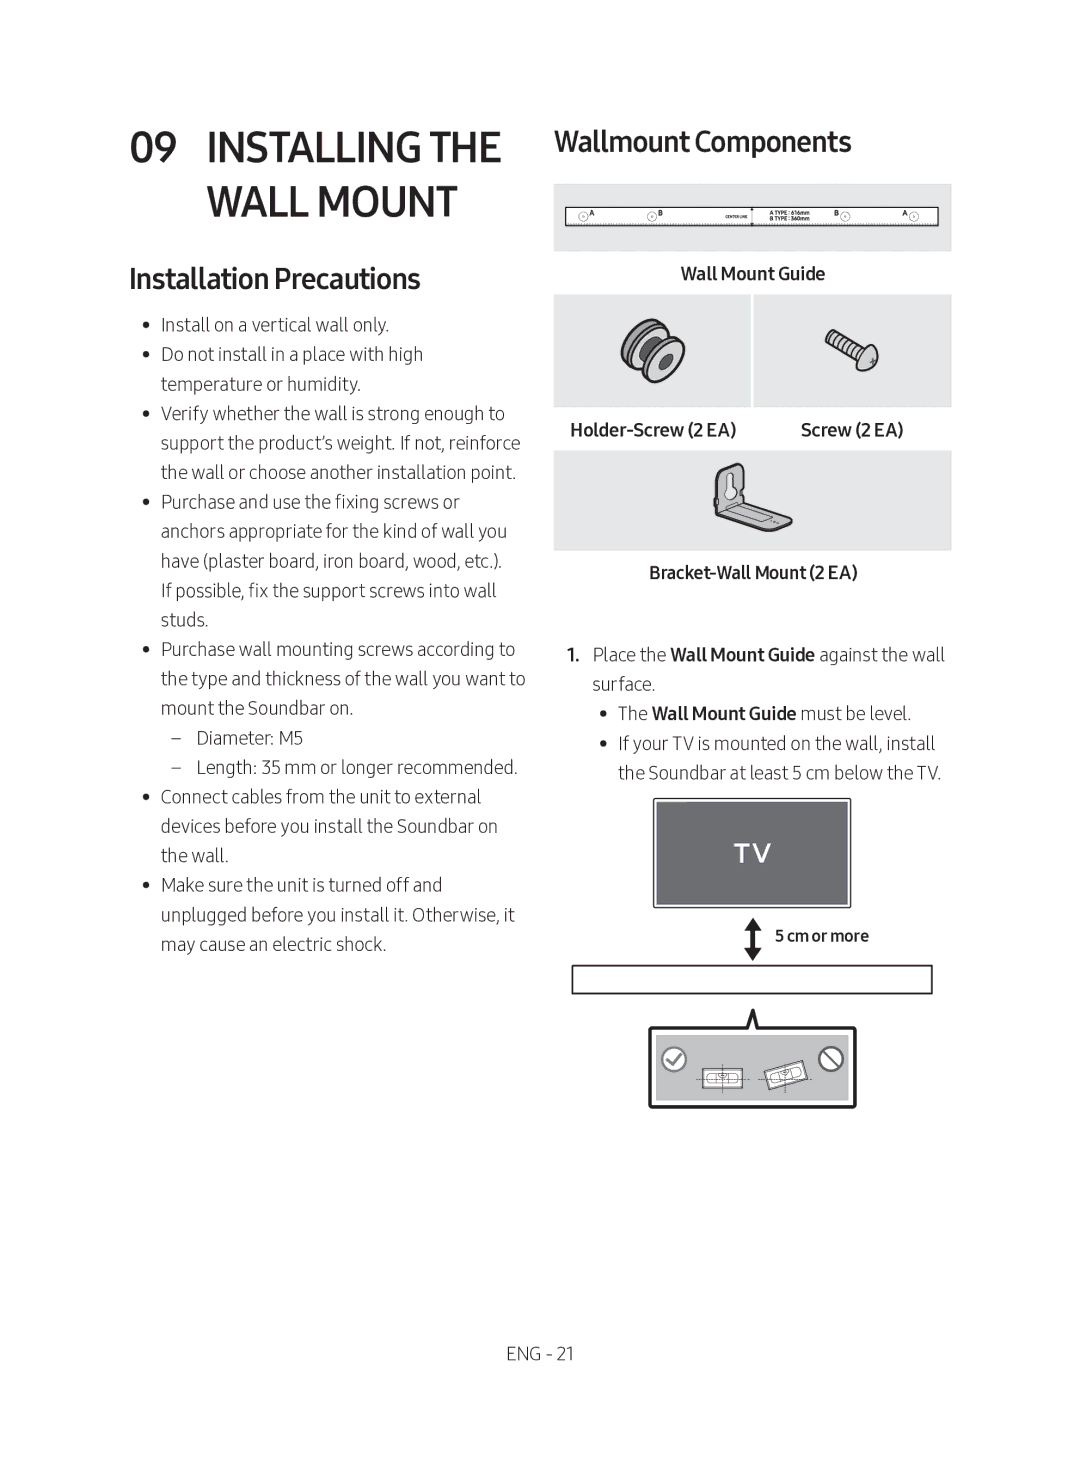 Samsung HW-N450/ZF manual Installing the Wallmount Components, Installation Precautions, Bracket-Wall Mount 2 EA 